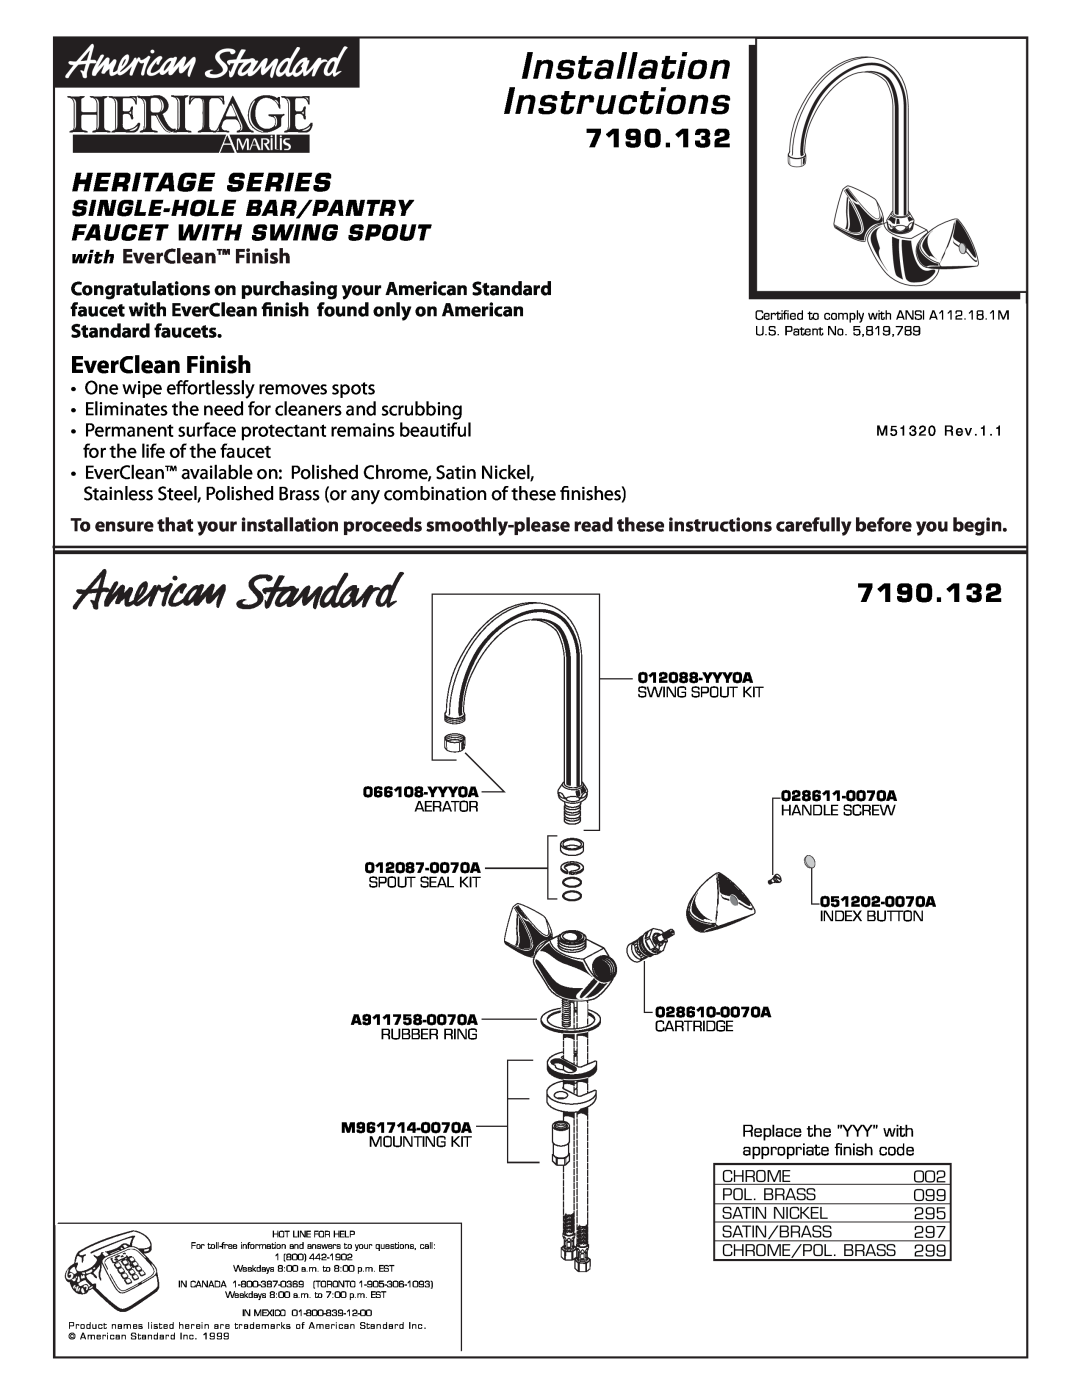 American Standard 7190.132 installation instructions Installation Instructions, Heritage Series, EverClean Finish 